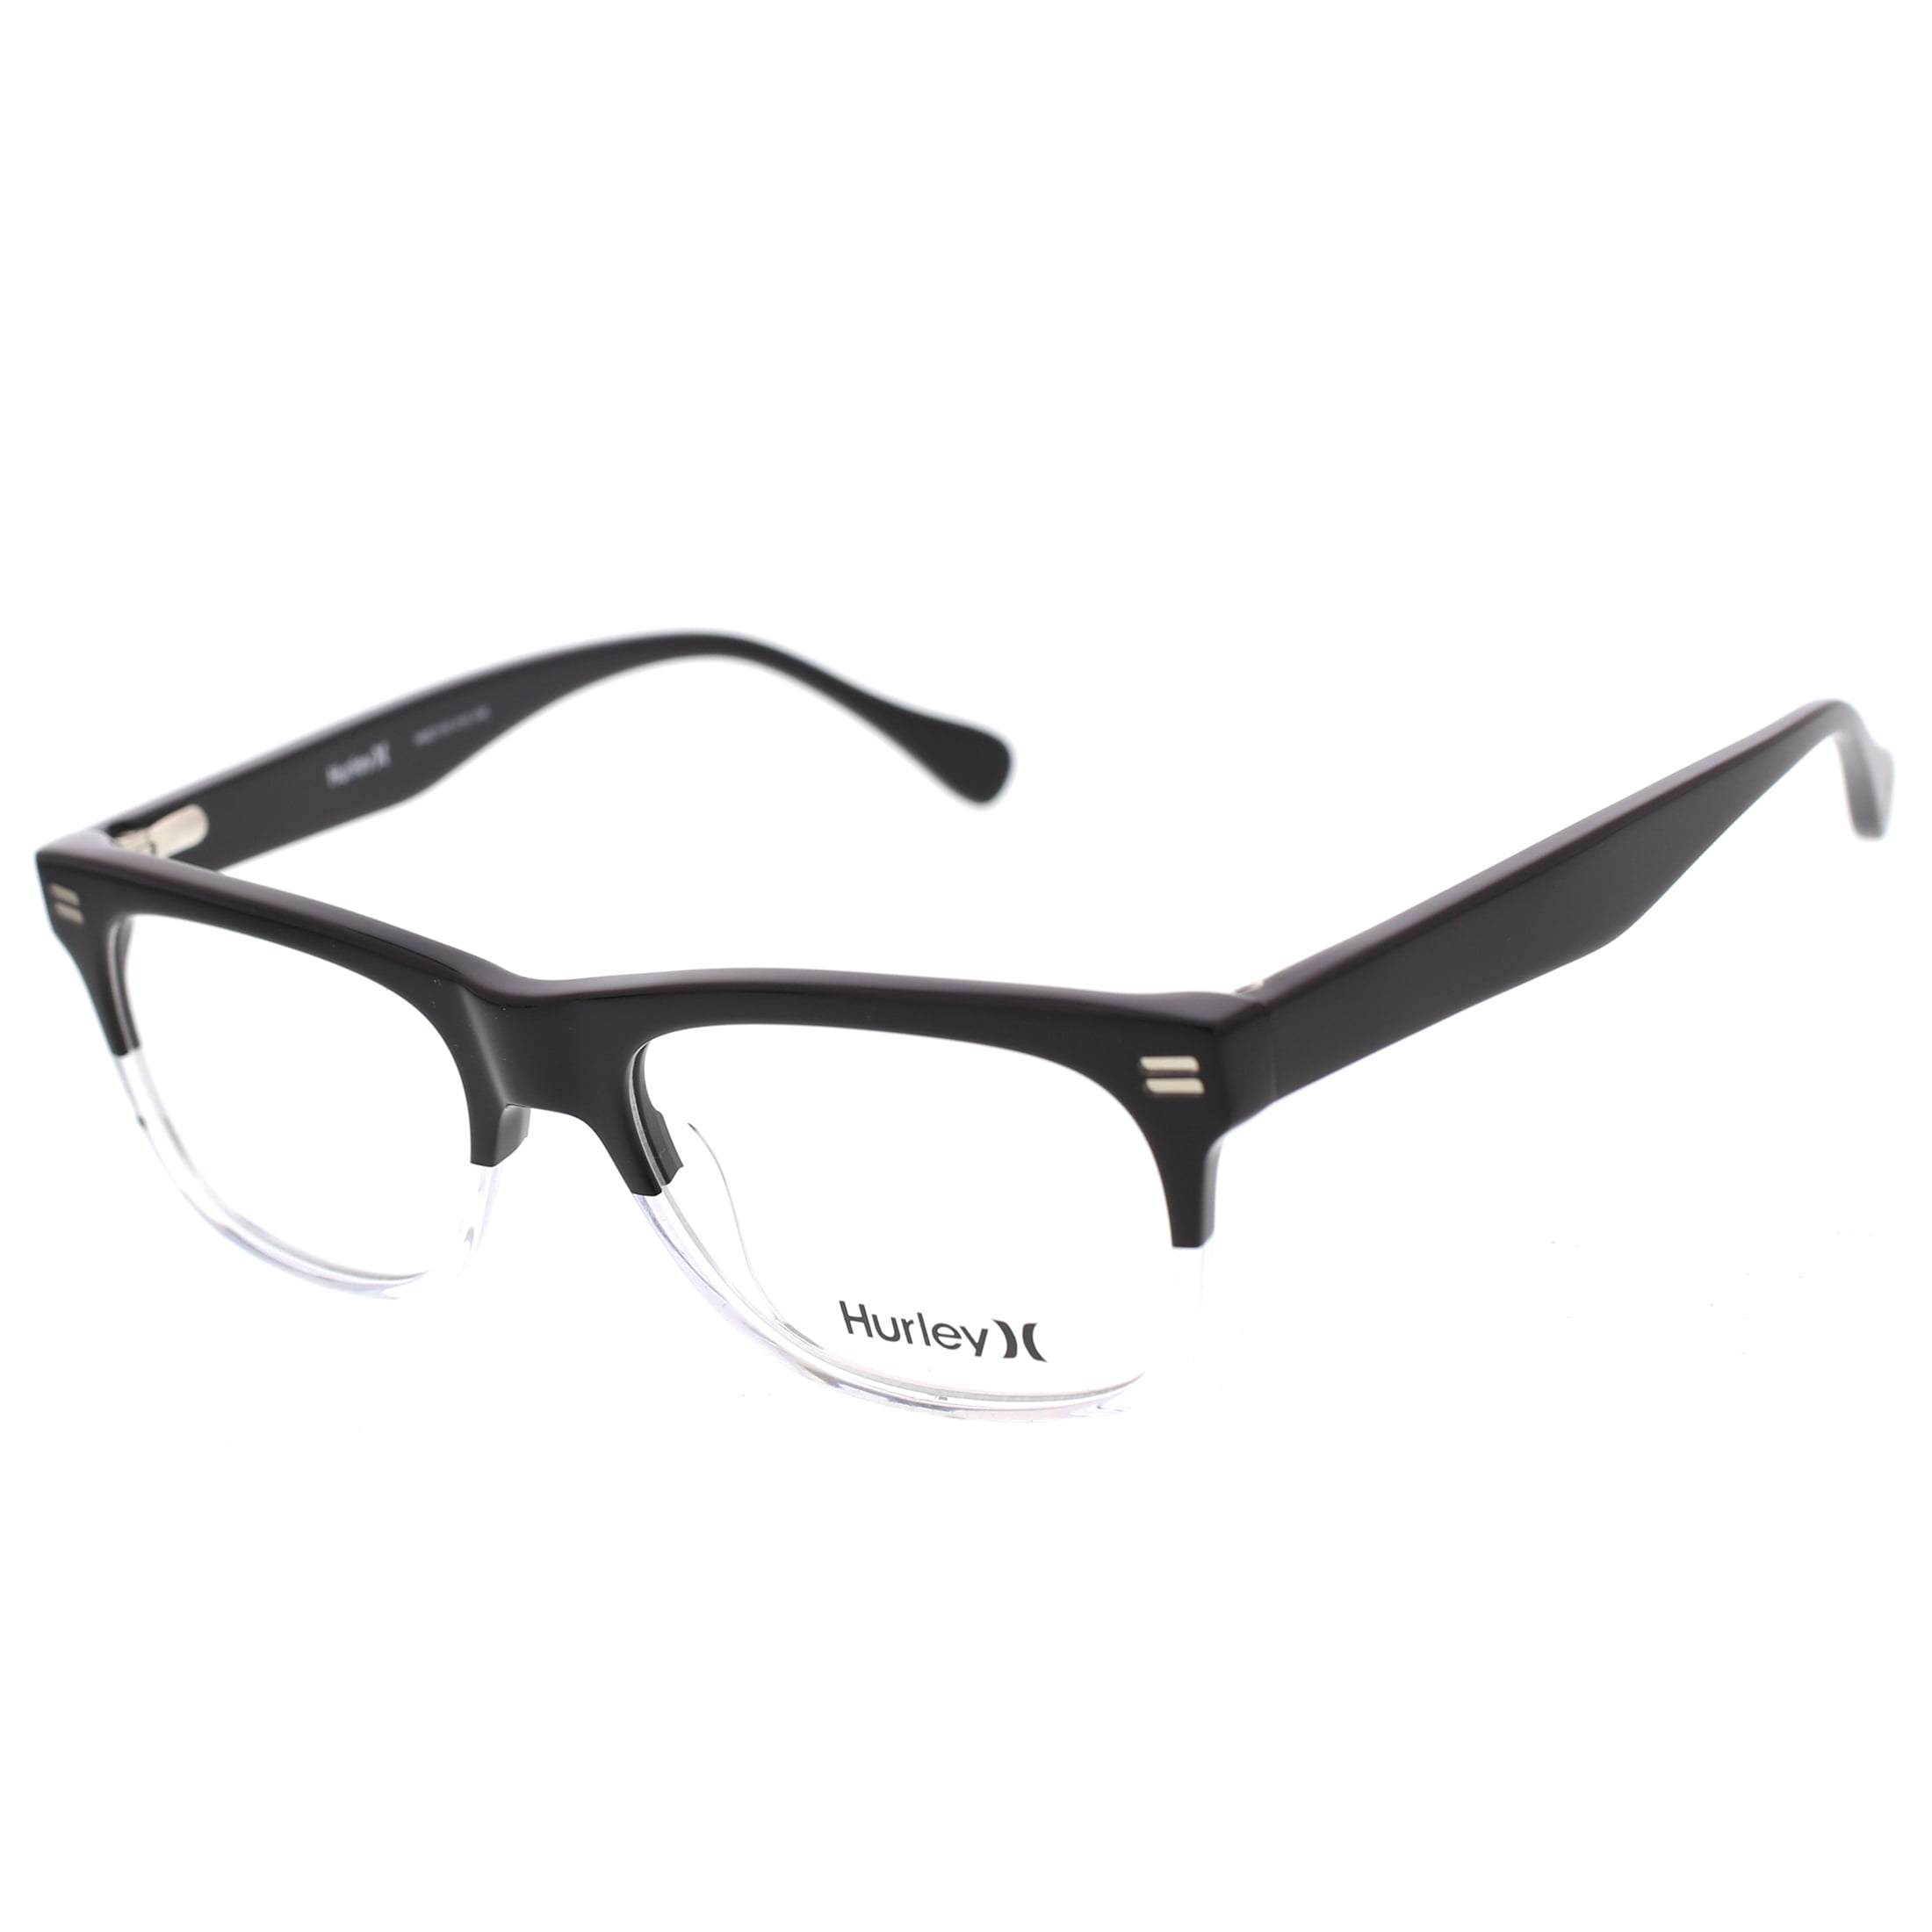 Hurley Men's Square Eyeglasses, Hmo119 West Coast, Black/Crystal, 54-18-145, with Case